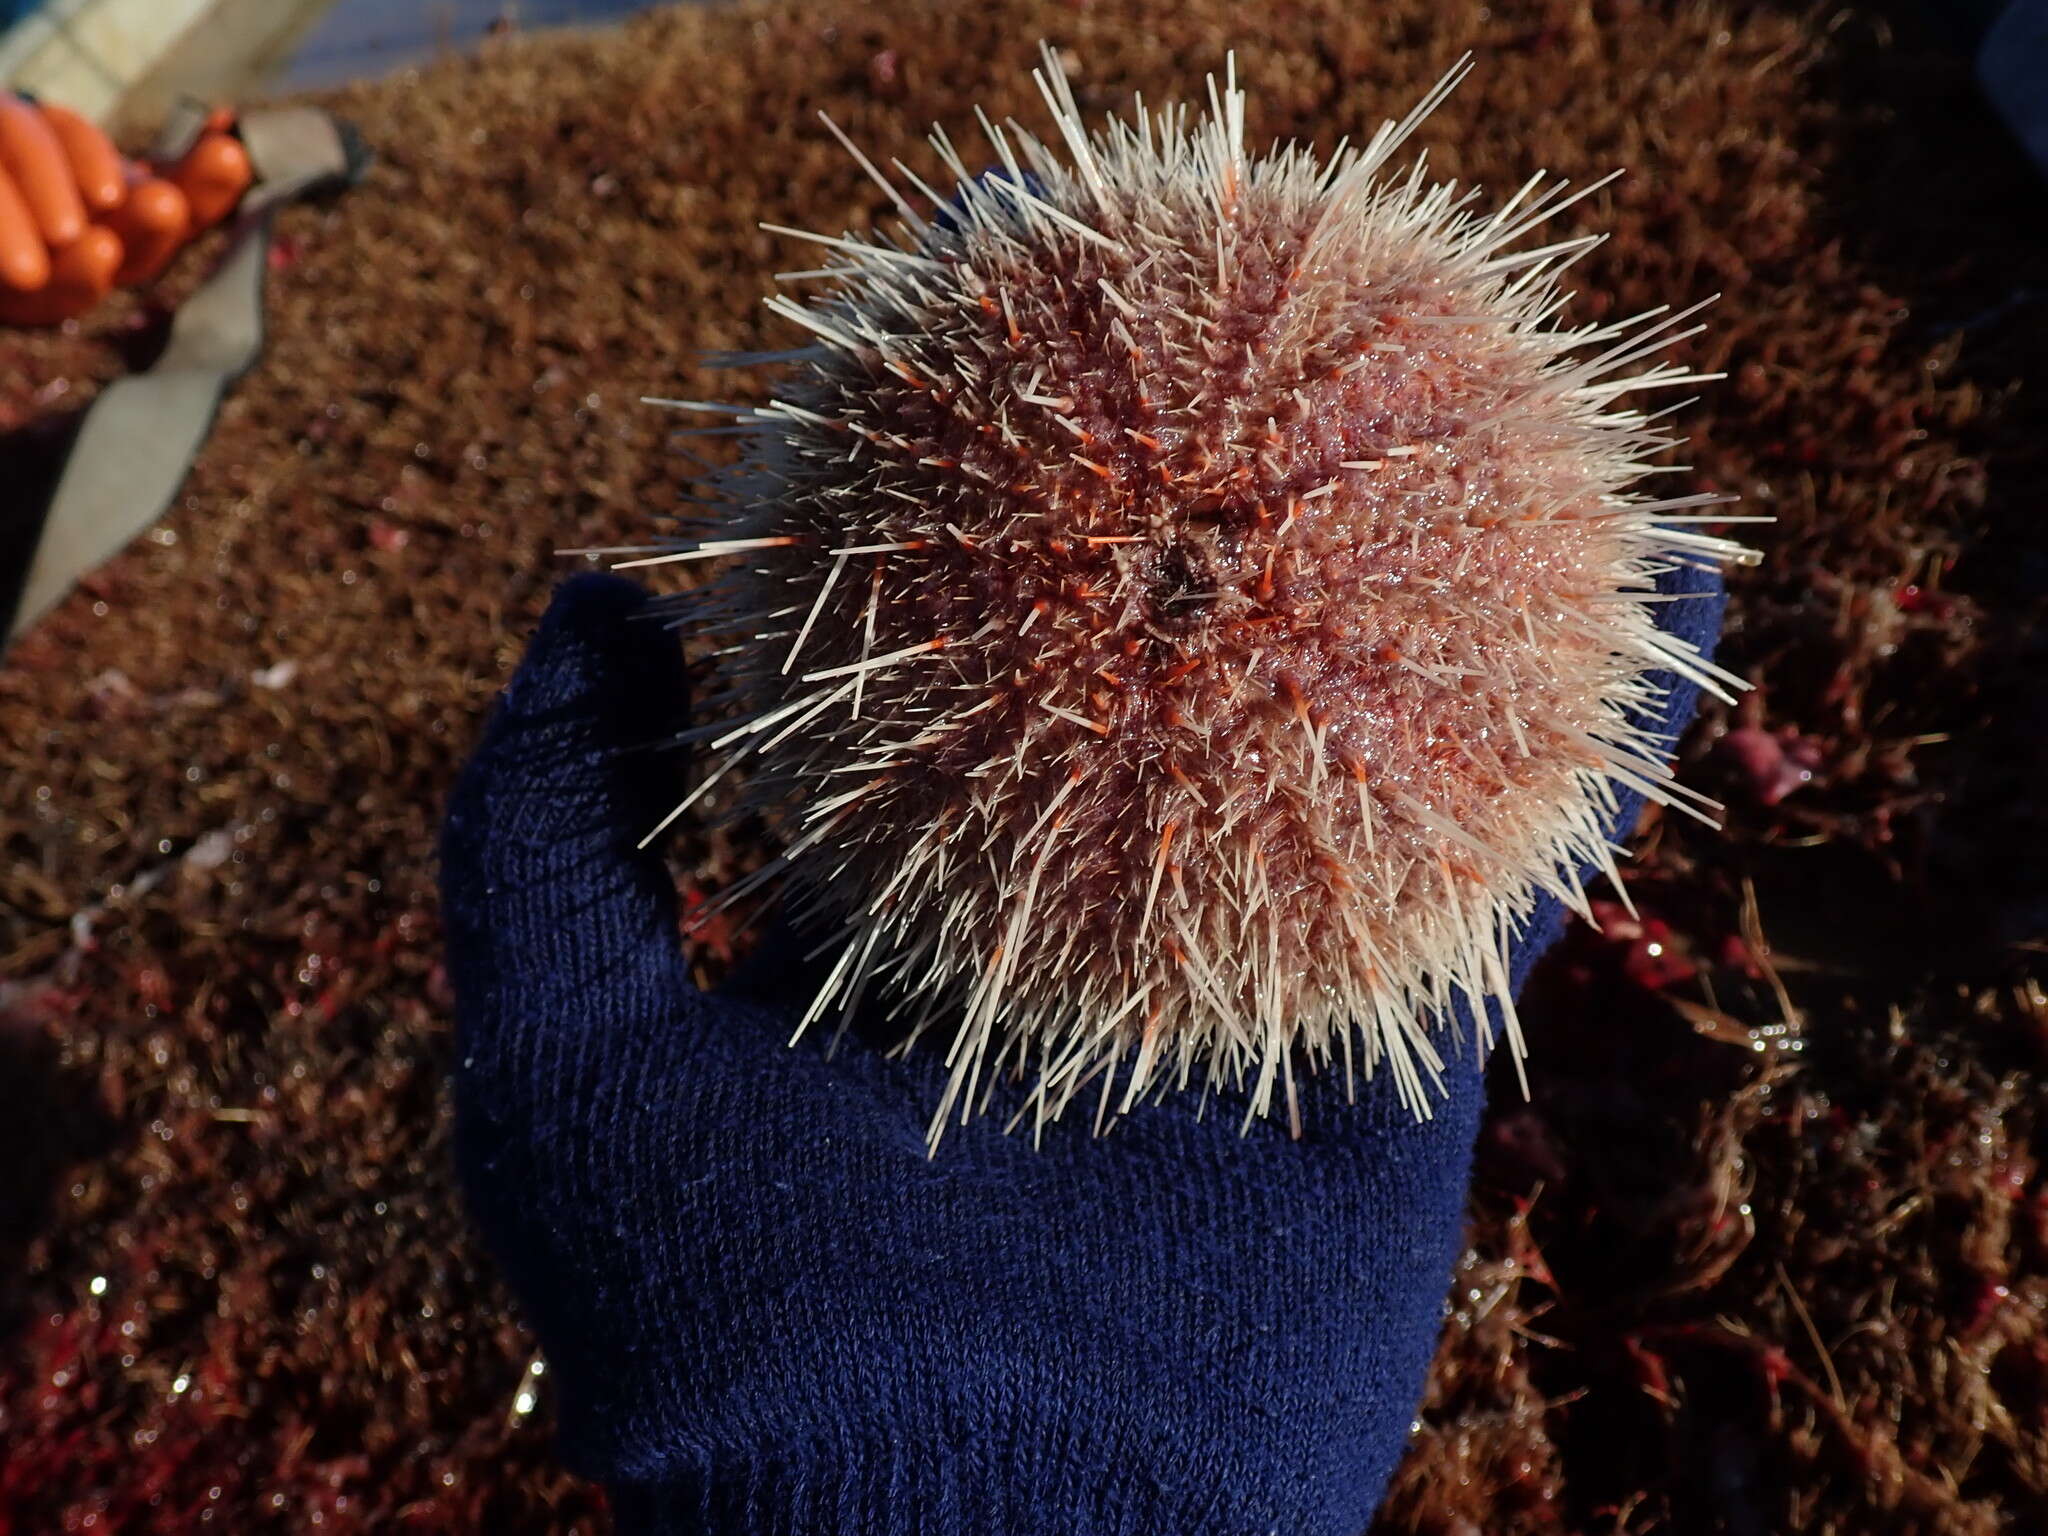 Image of fragile sea urchin